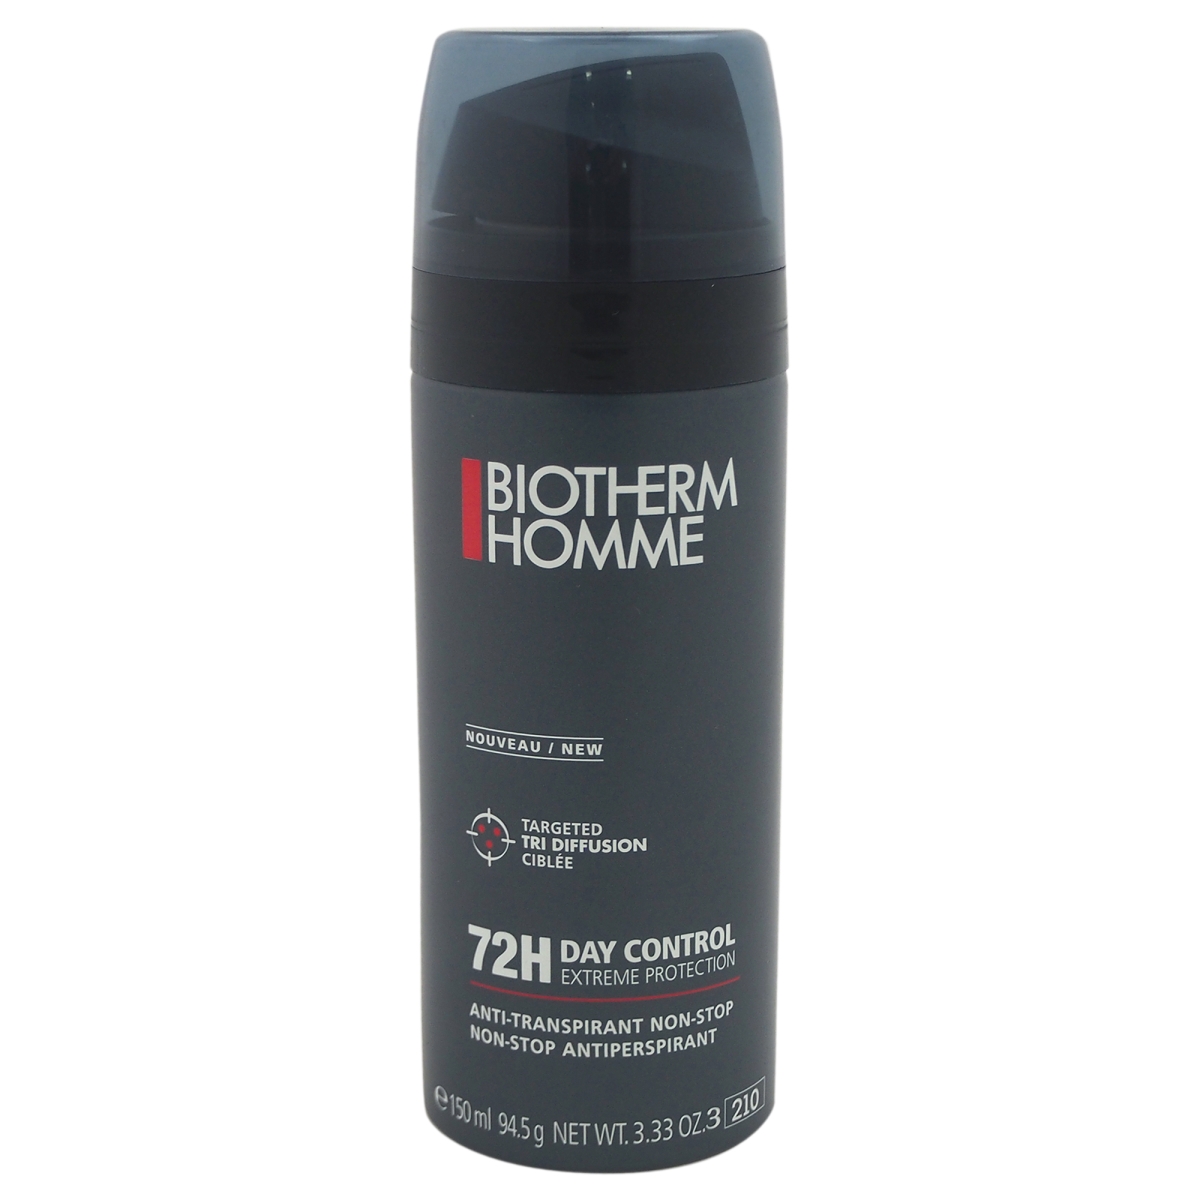 M-bb-2820 3.33 Oz Homme Day Control 72h Deodorant Spray For Men